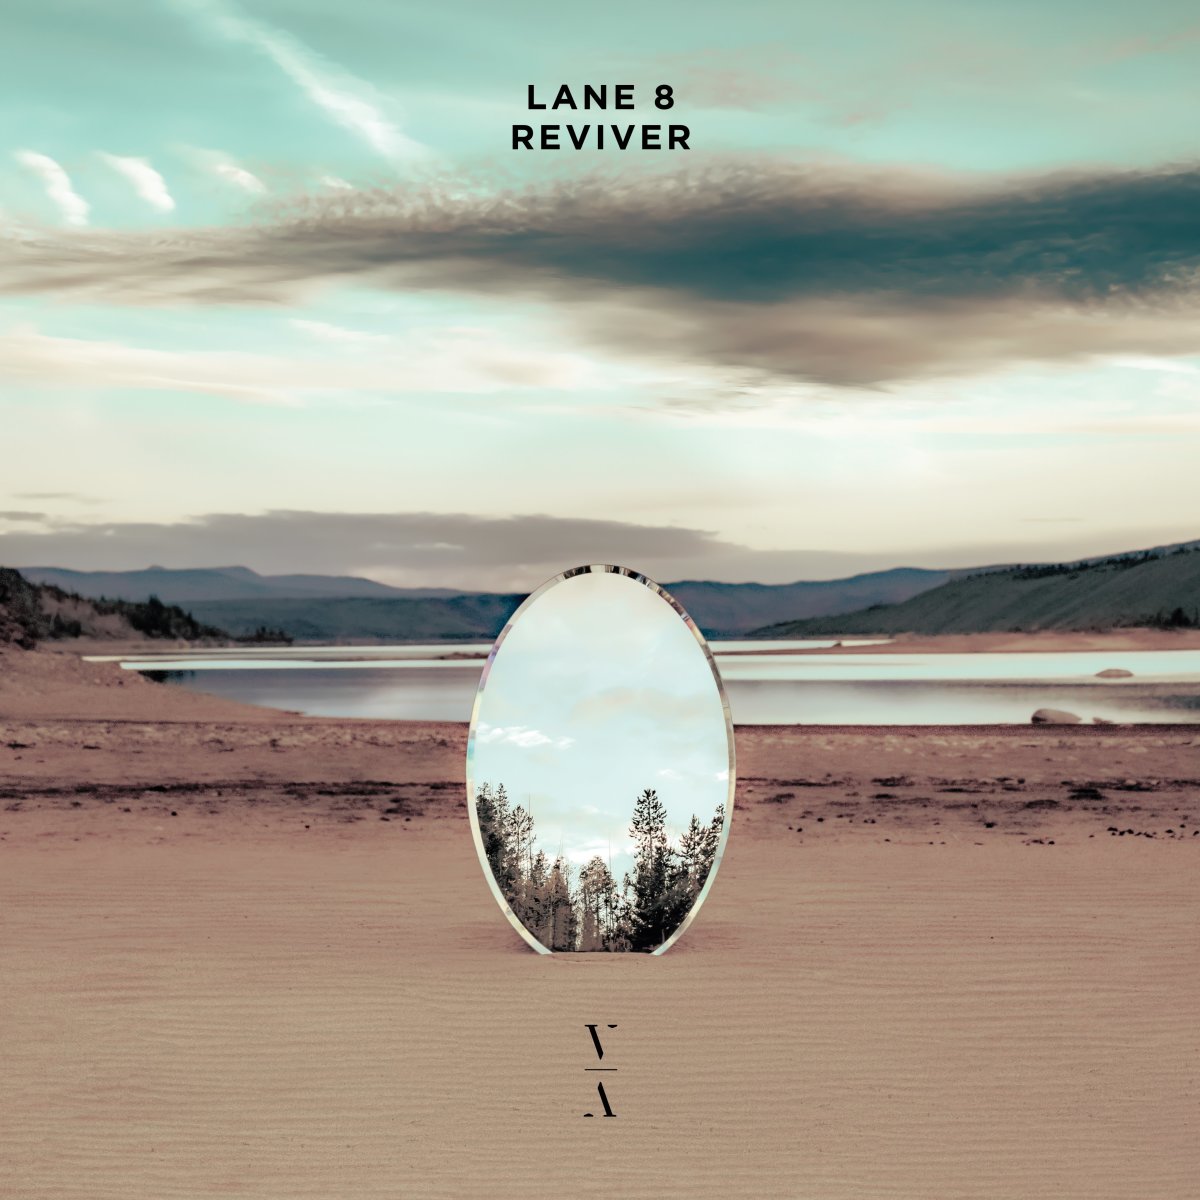 Cover art of Lane 8's upcoming album "Reviver."